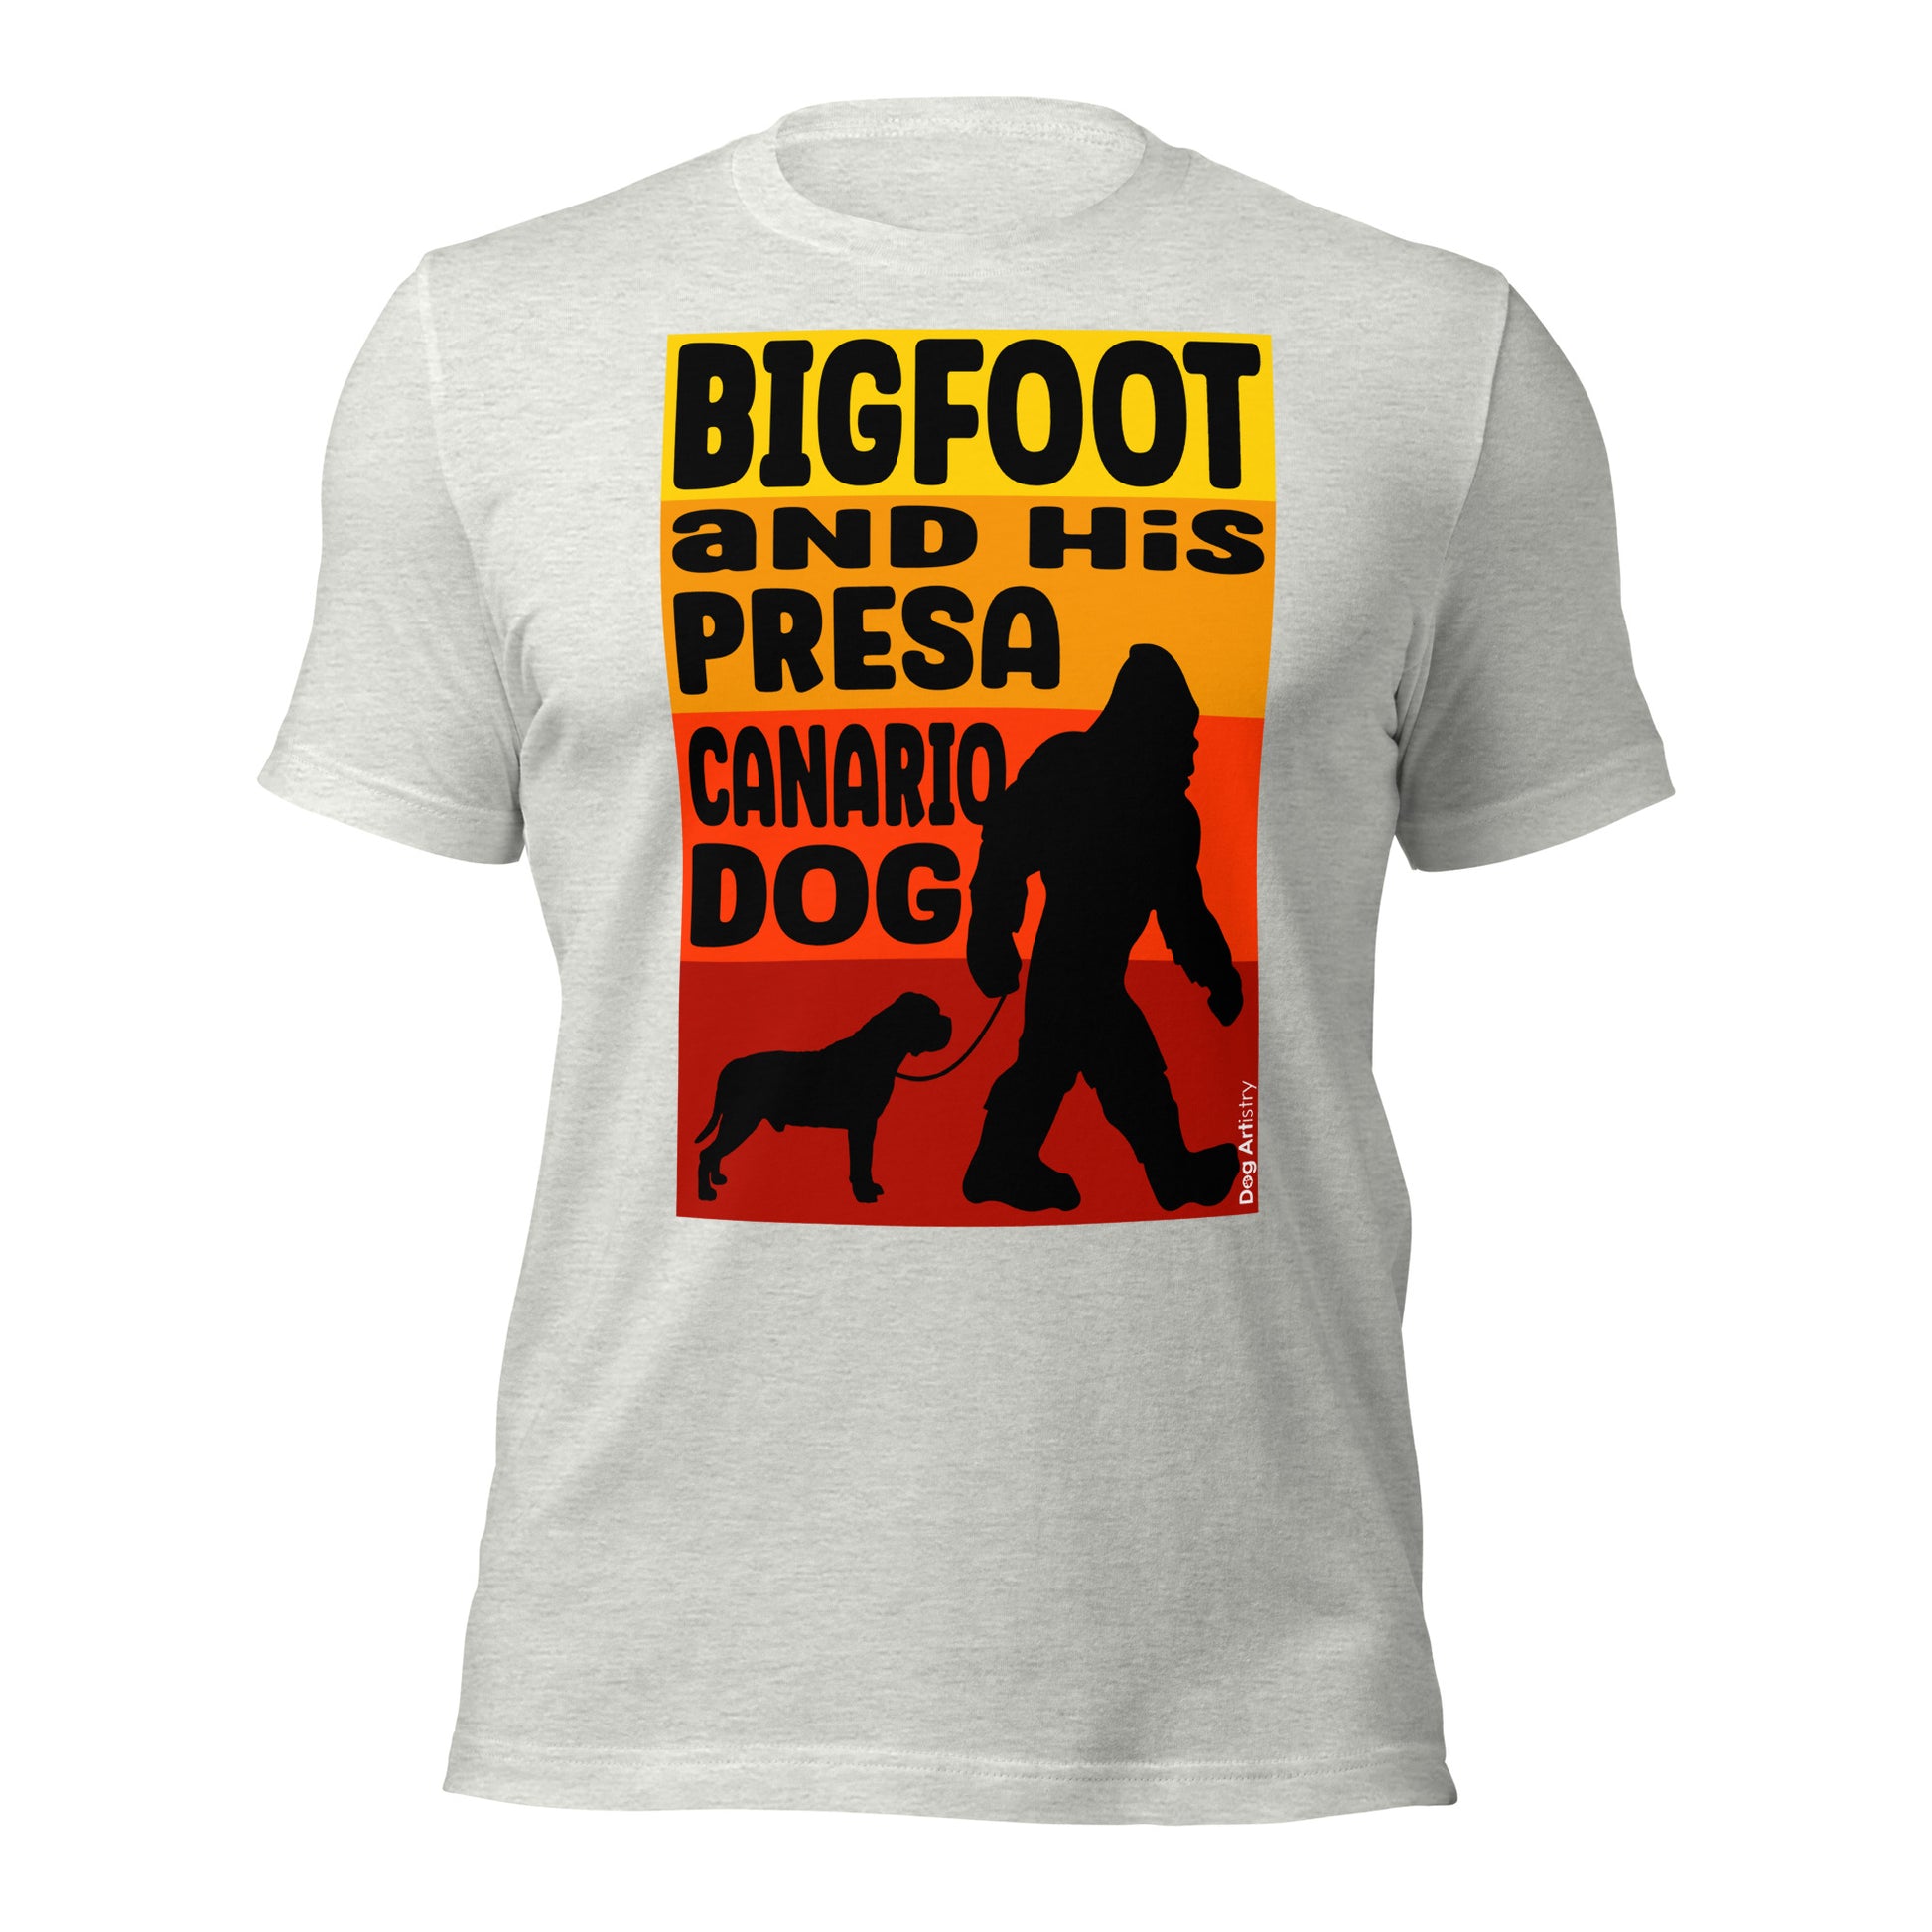 Bigfoot and his presa canario unisex ash t-shirt by Dog Artistry.